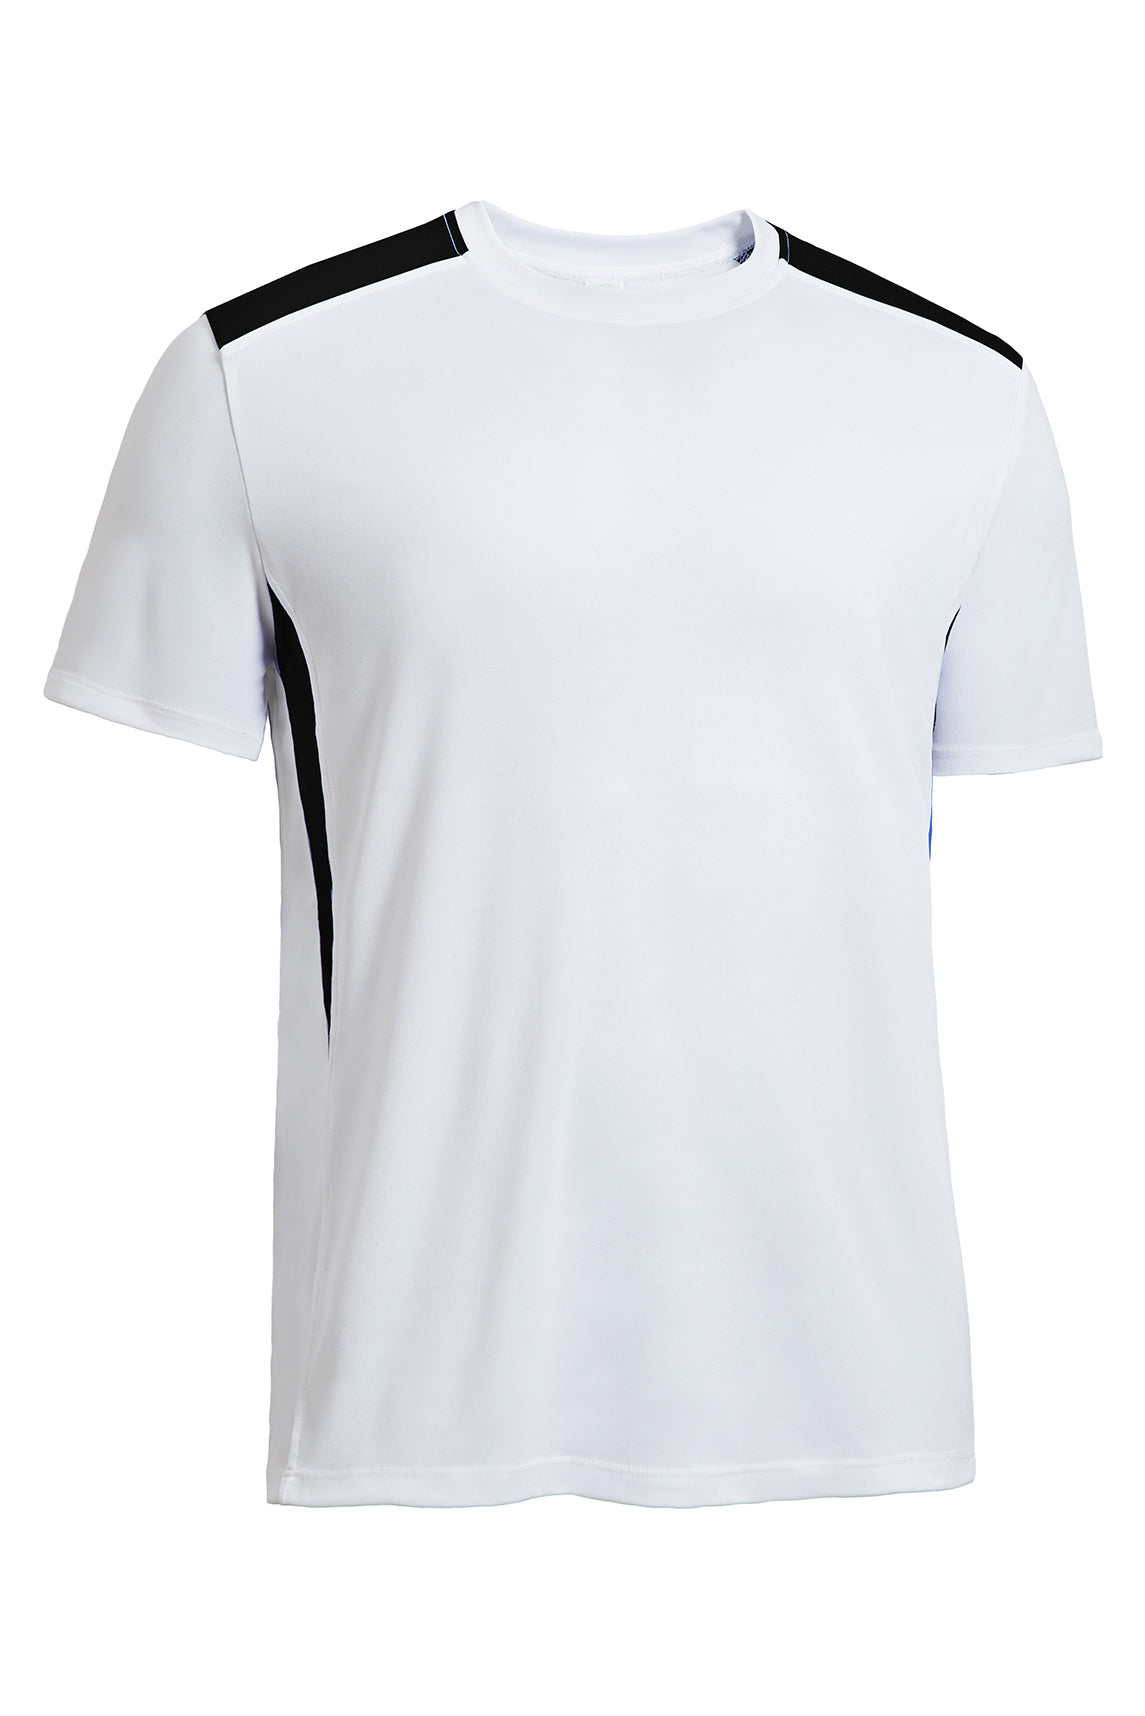 DriMax™ Stadium Tee 🇺🇸 - Expert Brand Apparel#color_white-black